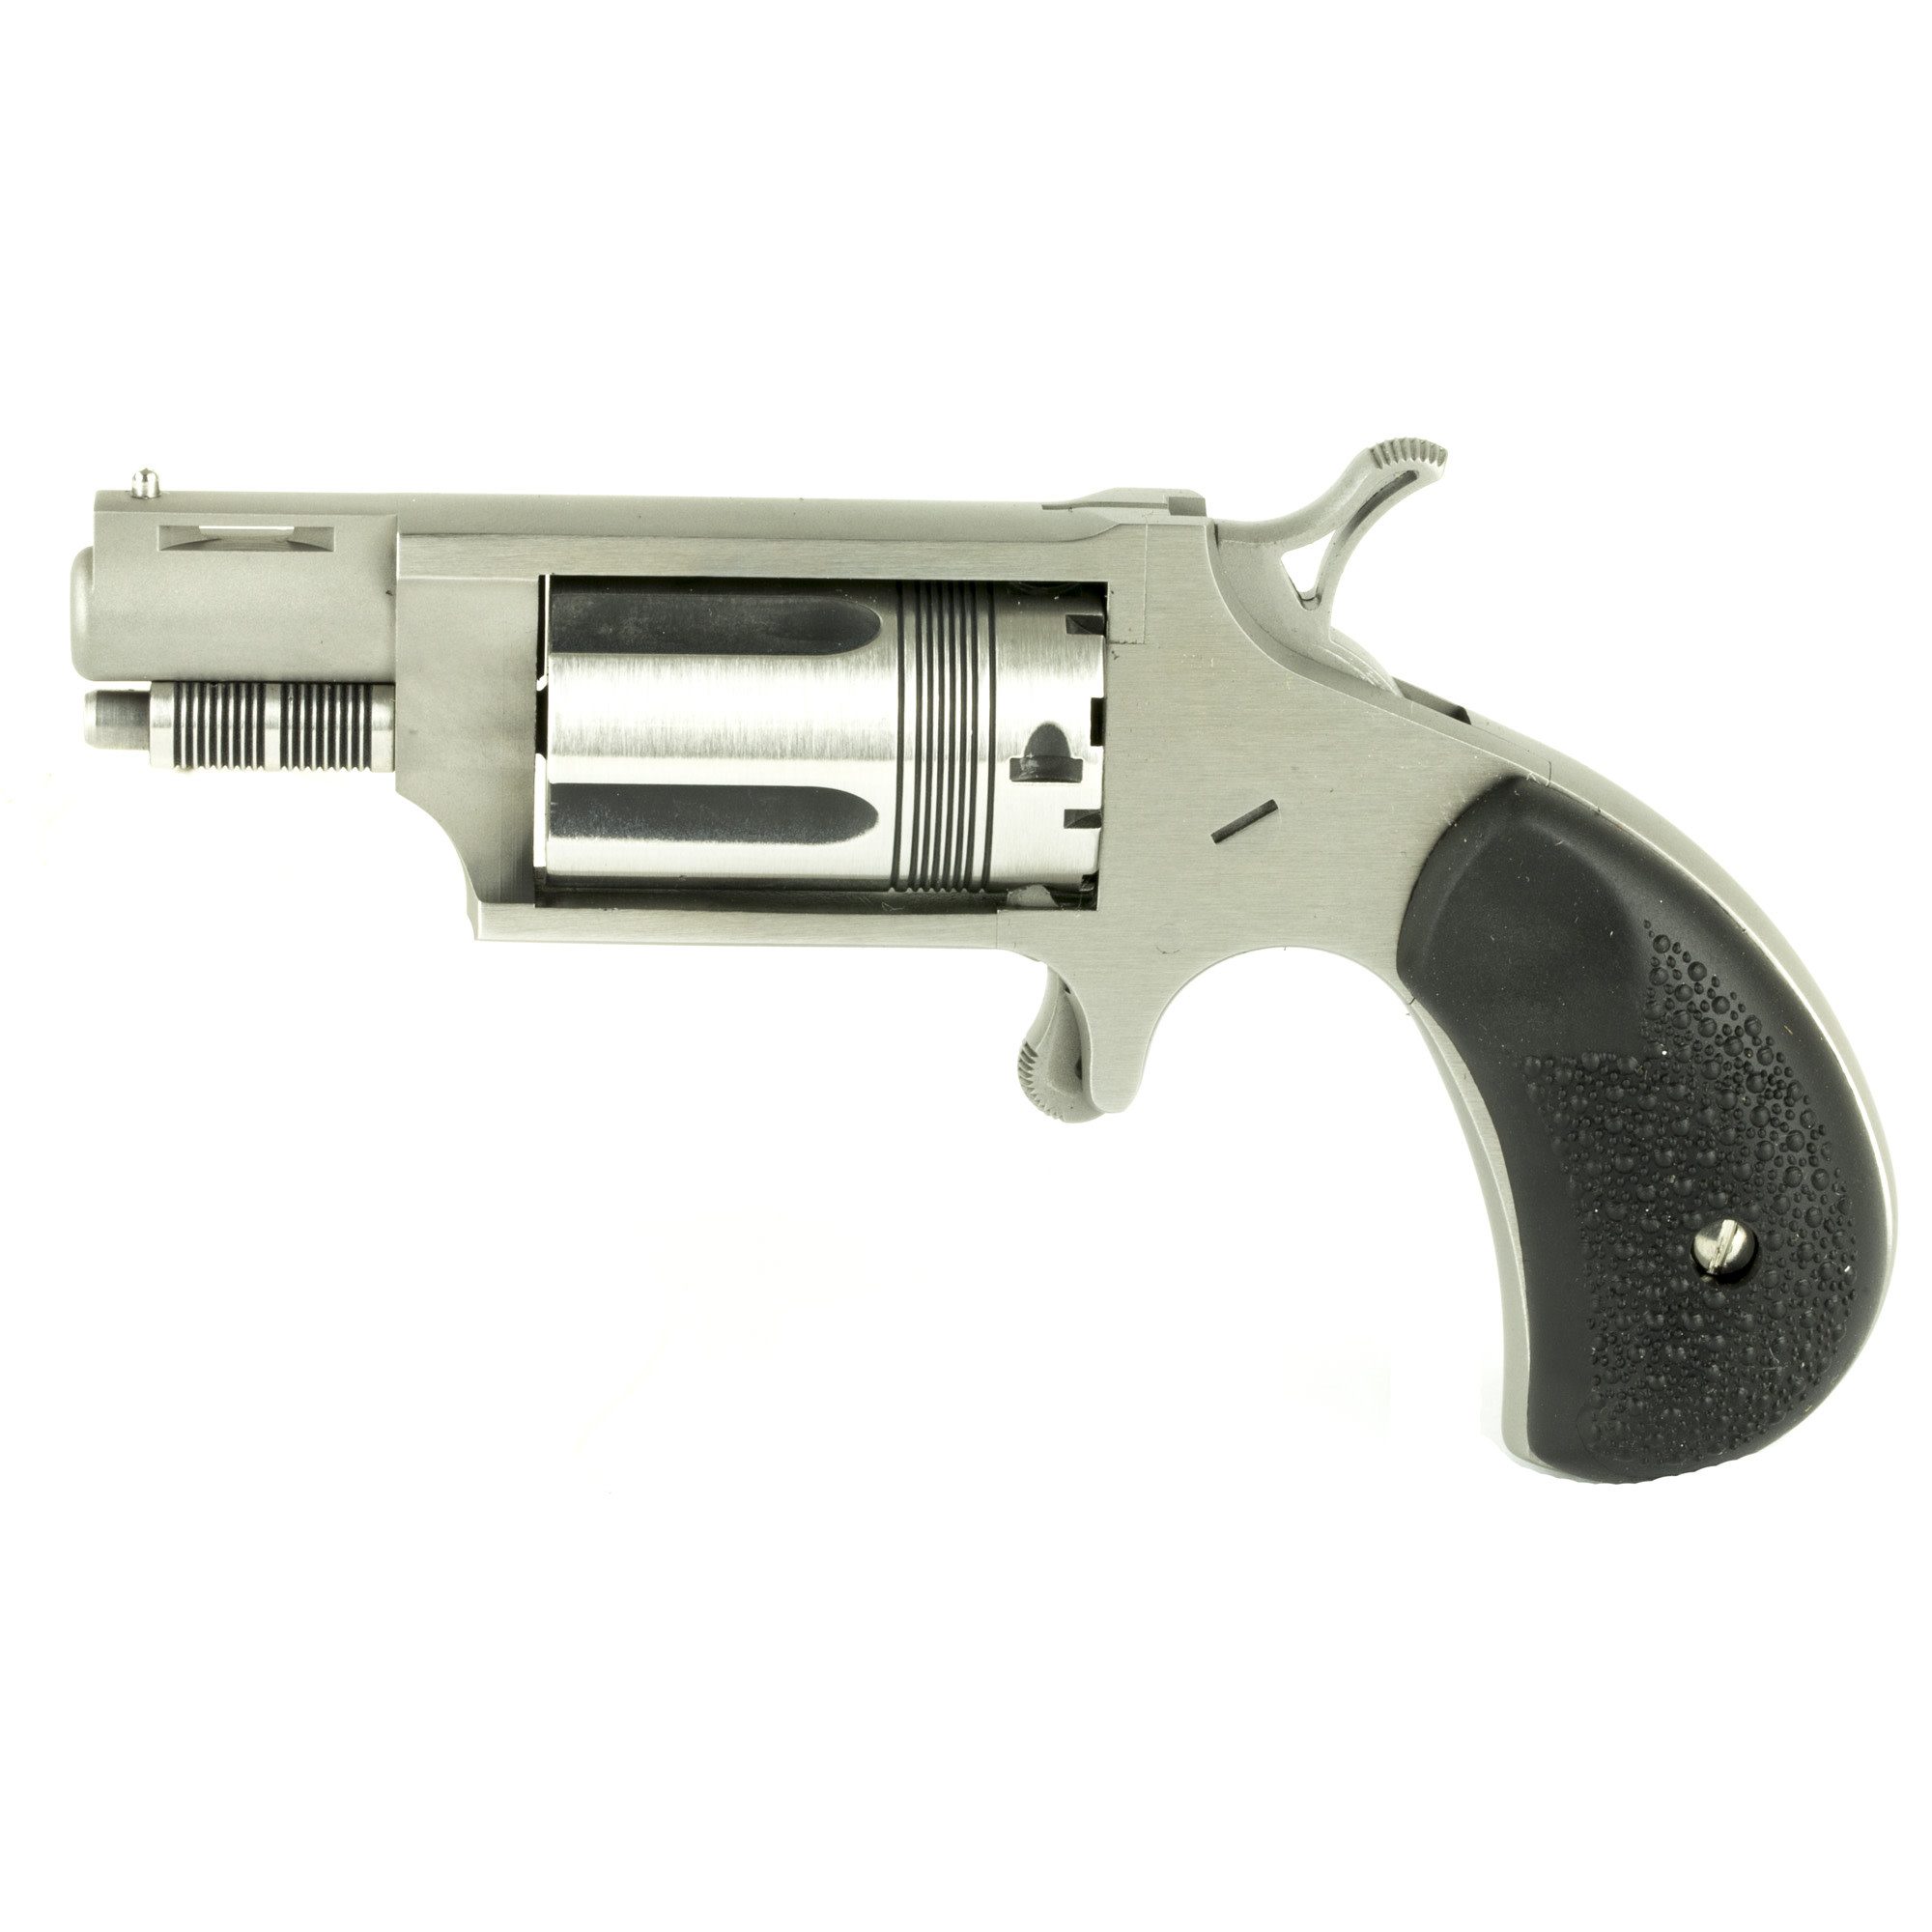 North American Arms, The Wasp Snub 22LR/22 WMR, 1.125" BLK/SS 5RD Revolver